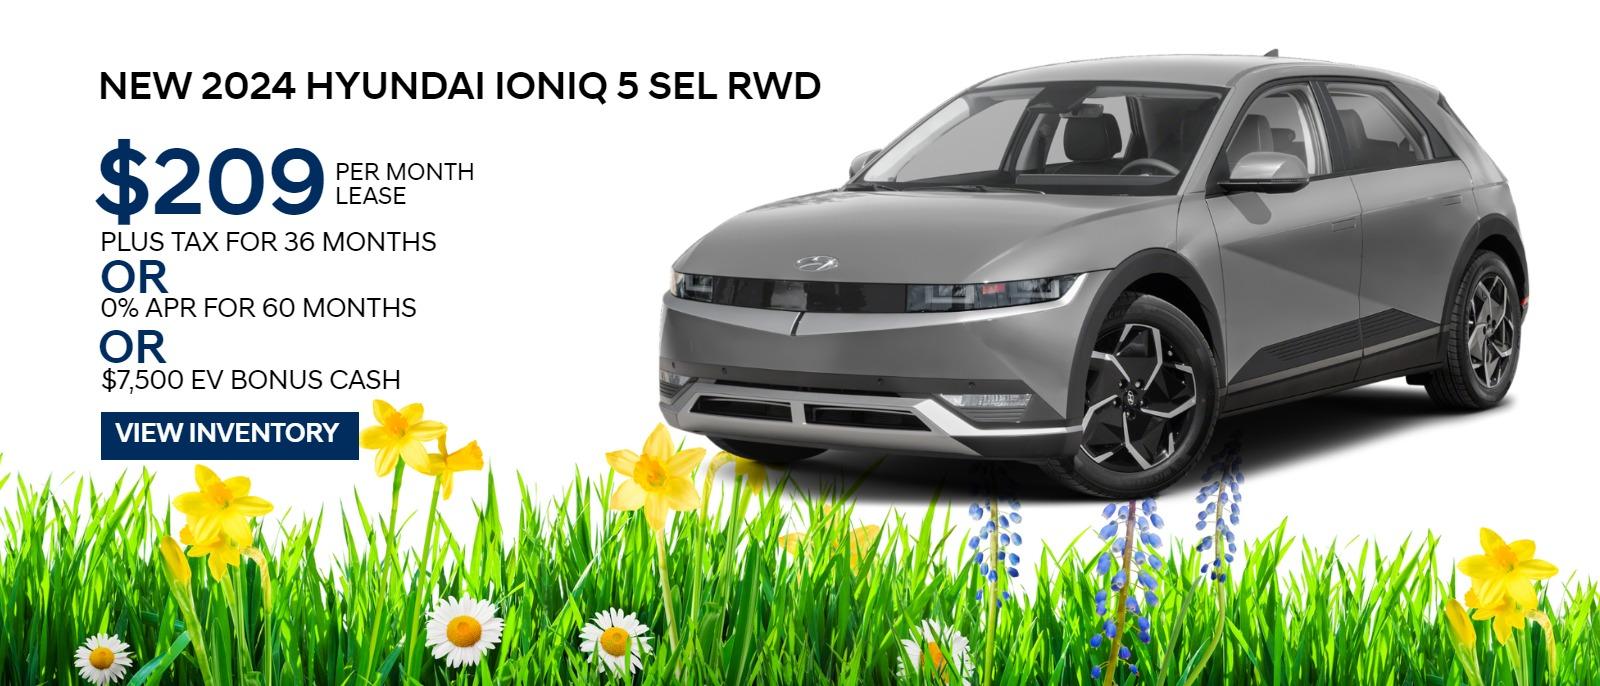 New 2024 Hyundai Ioniq 5 SEL RWD
$209/Mo. Lease + tax for 36 months*
OR 0% APR for 60 Months
OR $7,500 EV Bonus Cash